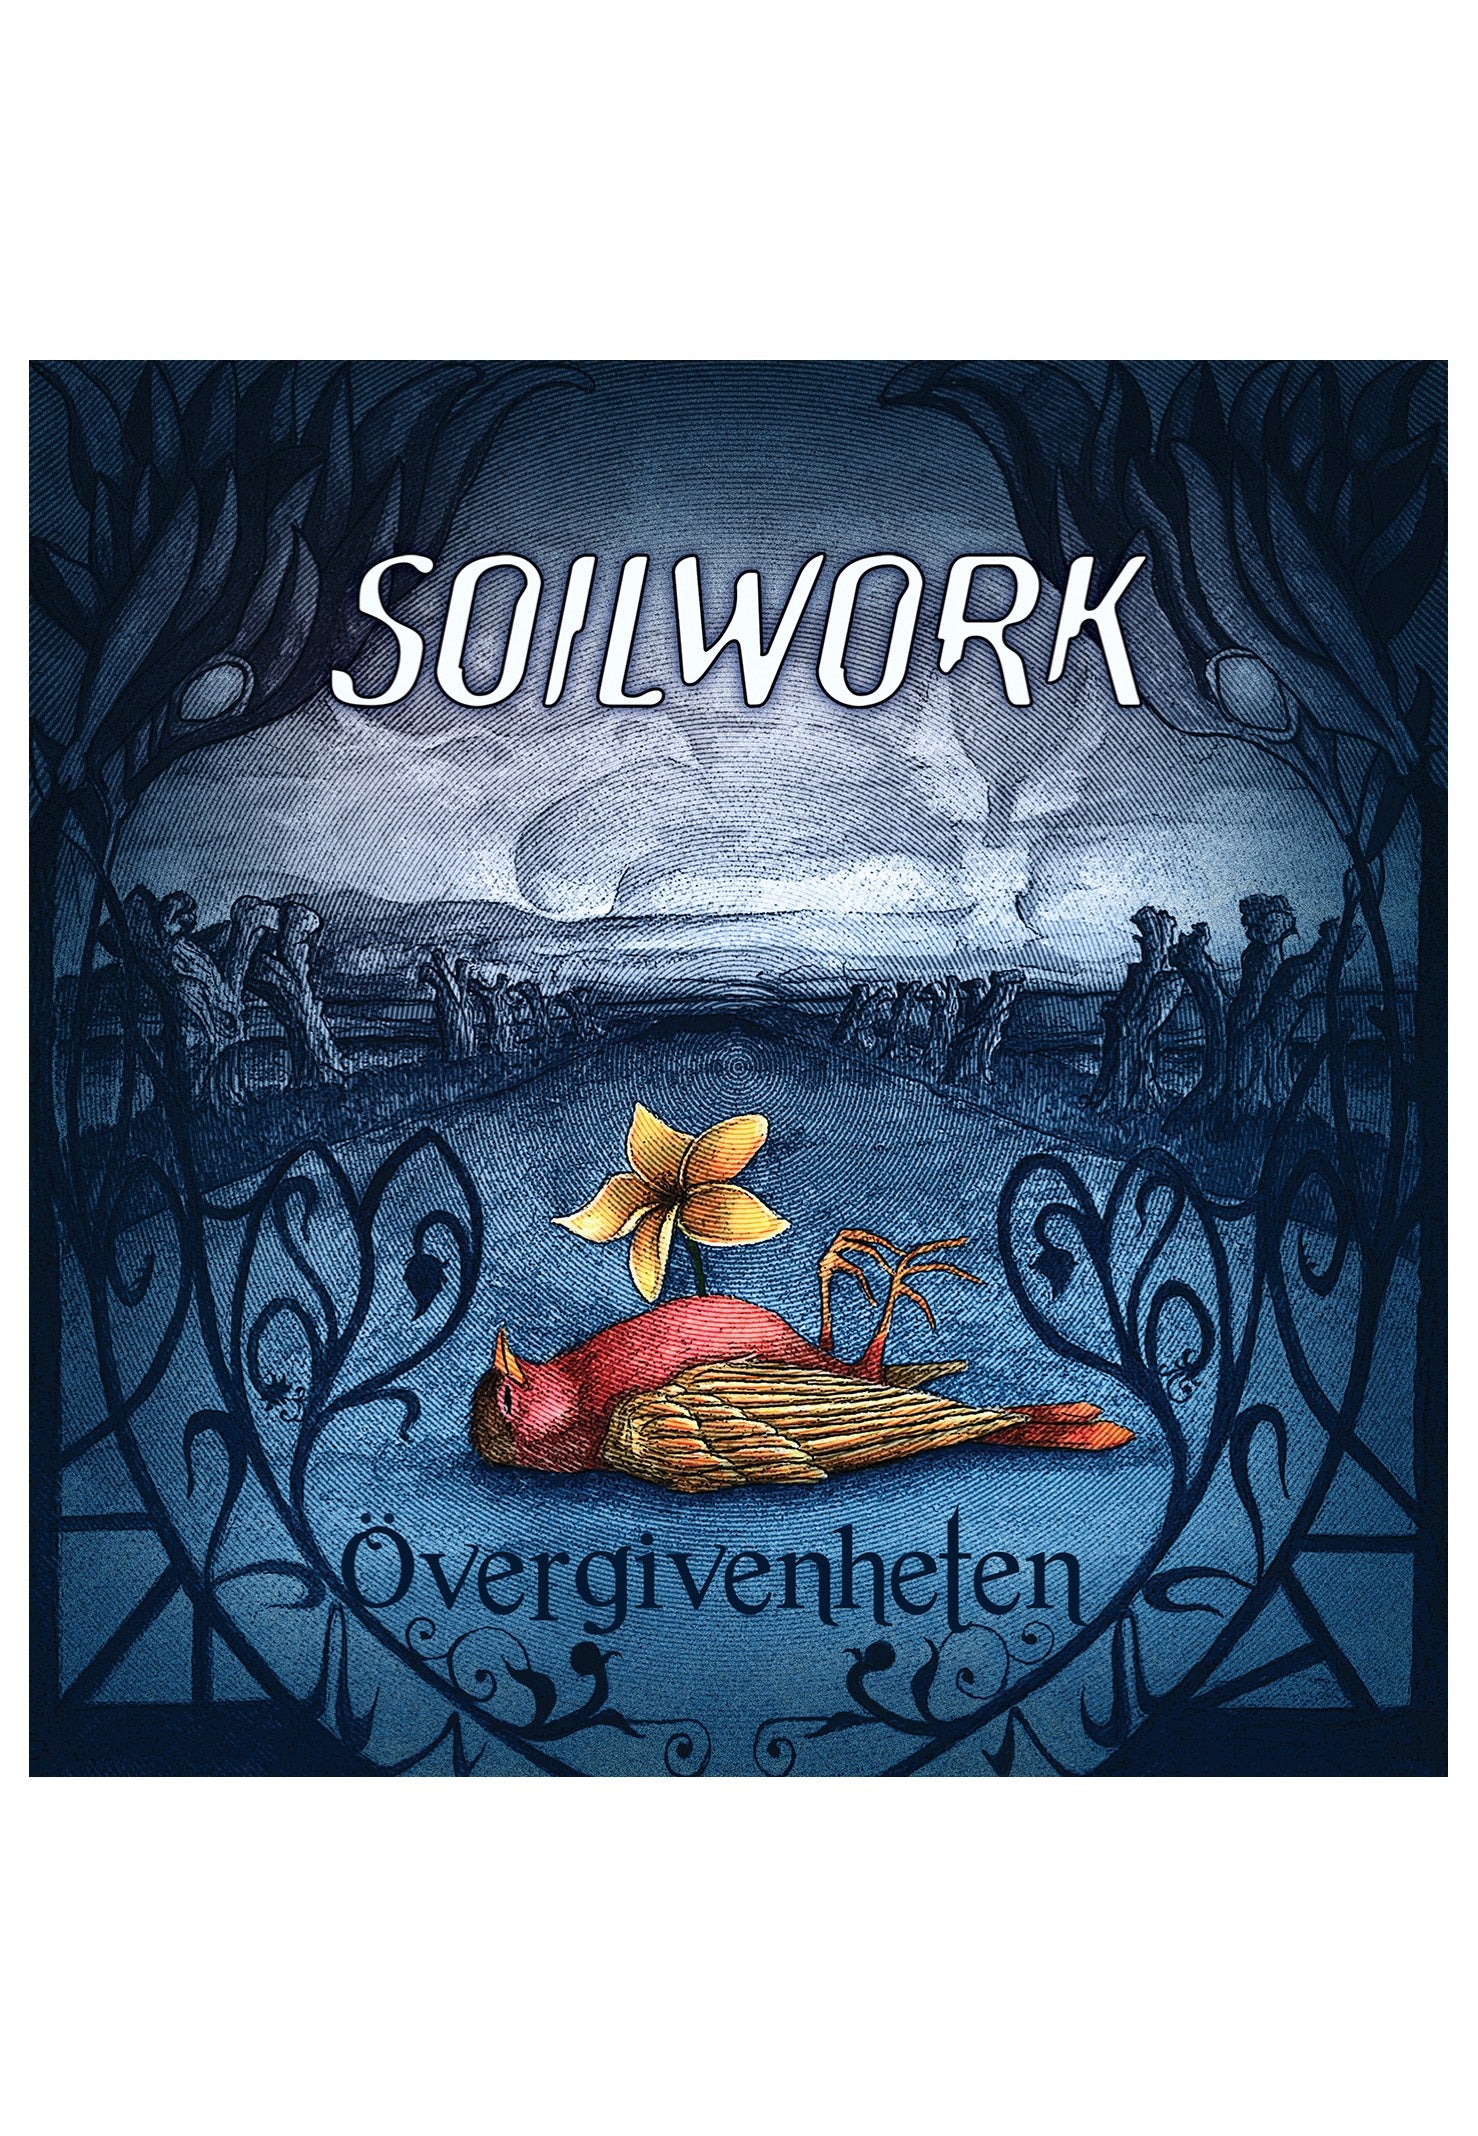 Soilwork - Övergivenheten Ltd. - Digipak CD